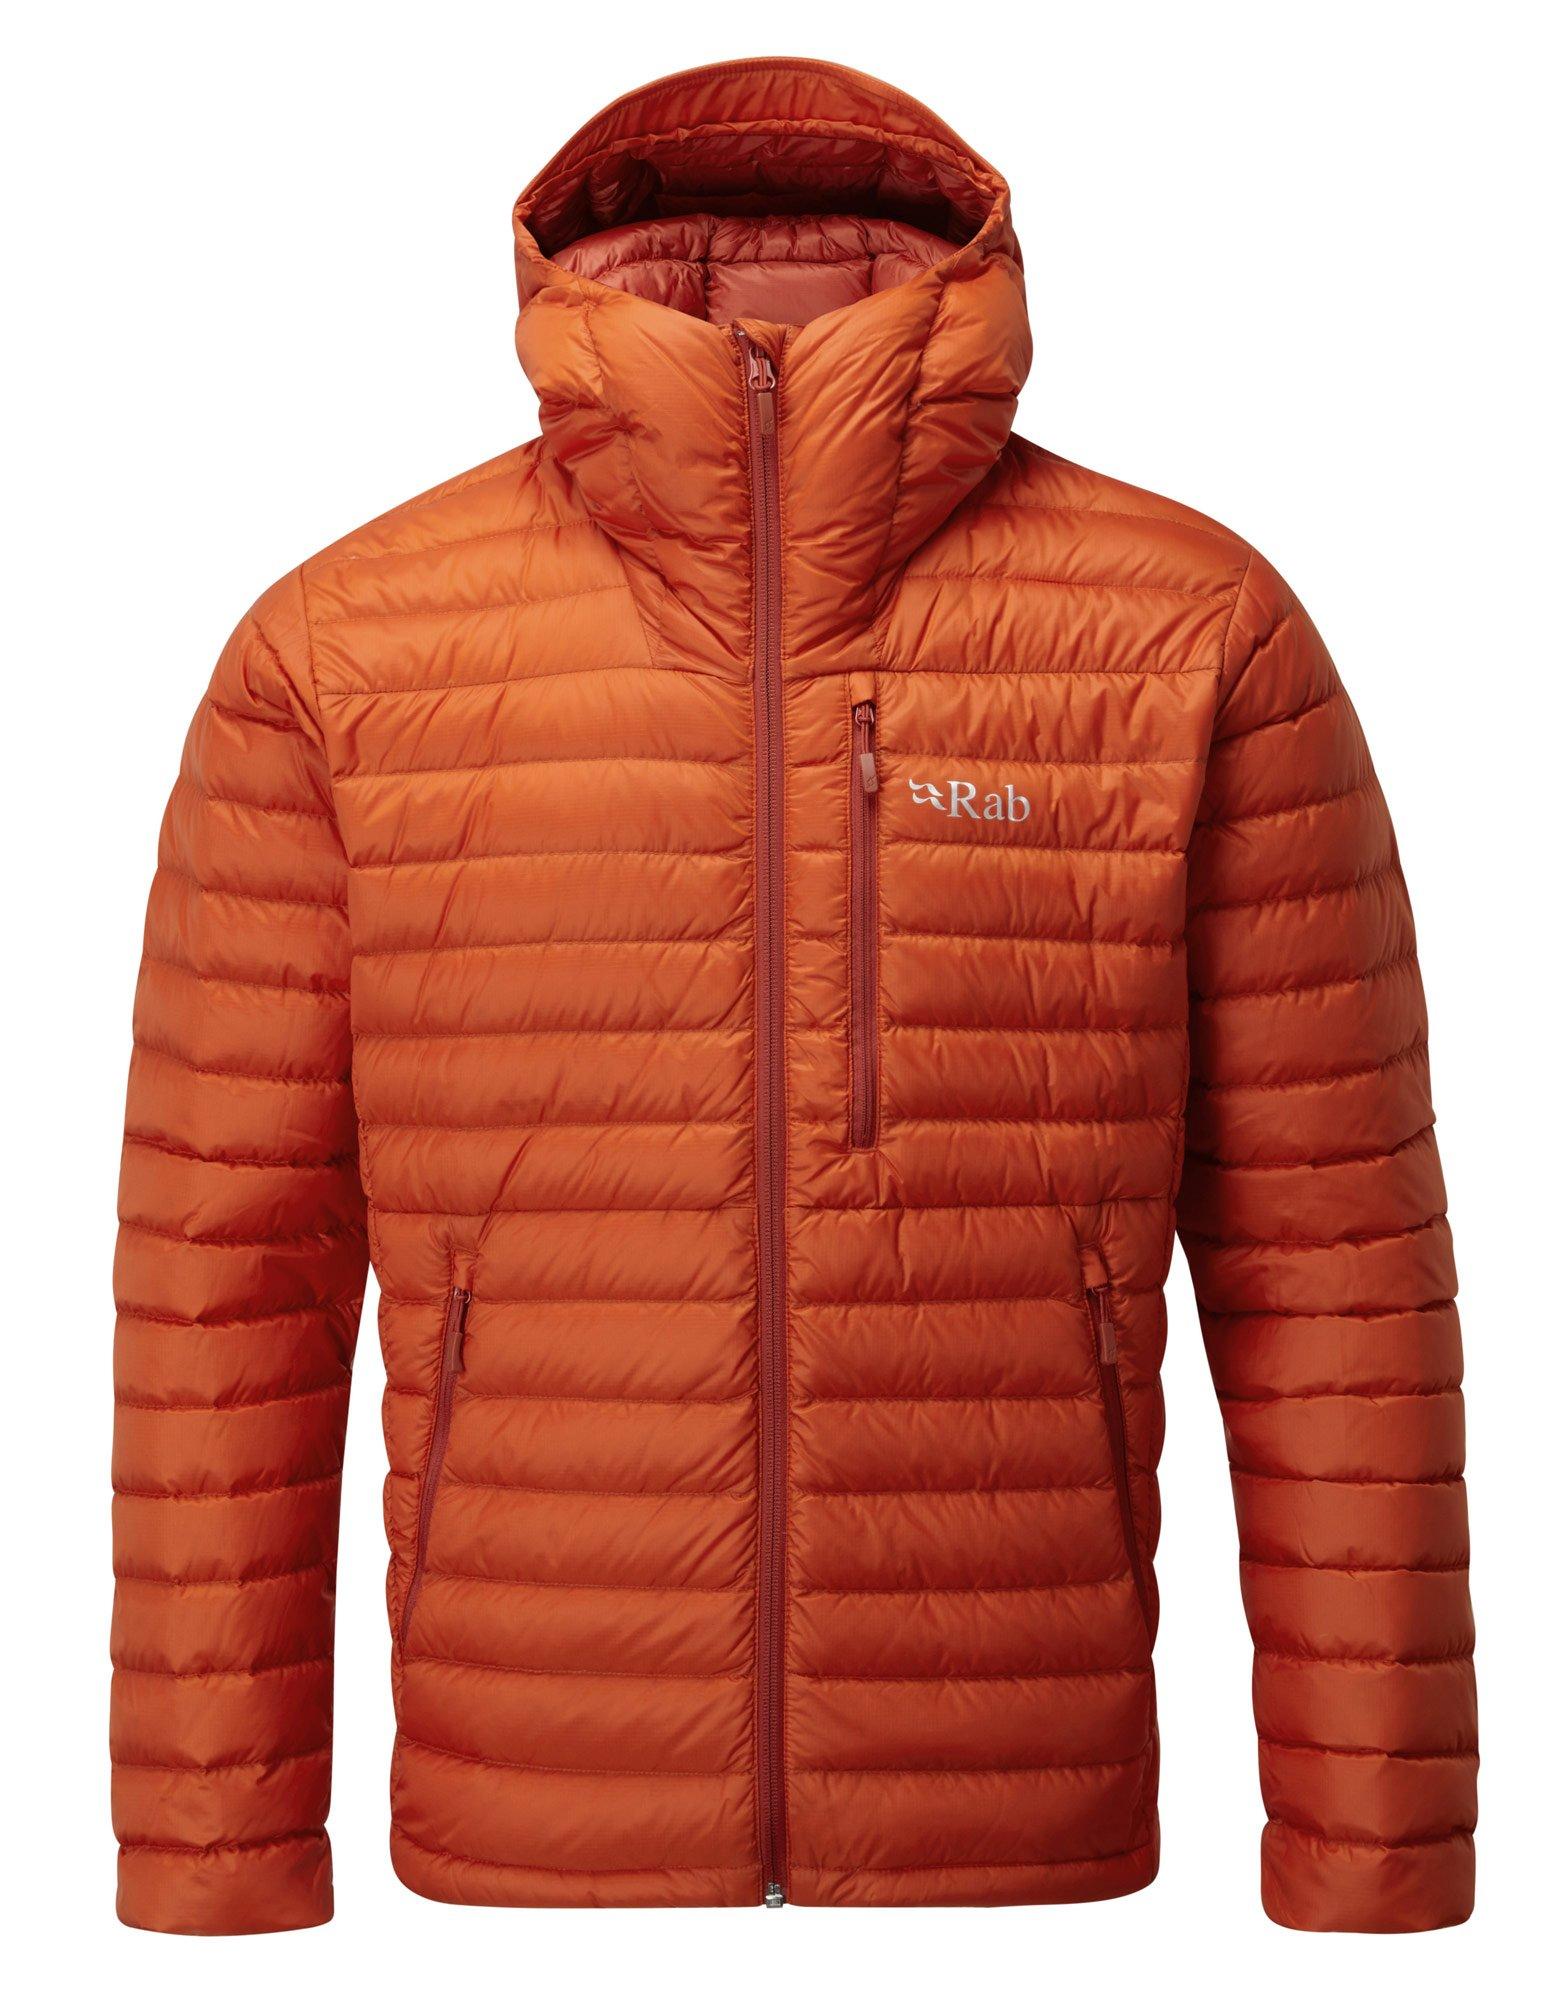 Rab Microlight Alpine Jacket – Men’s | jacketcompare.co.uk